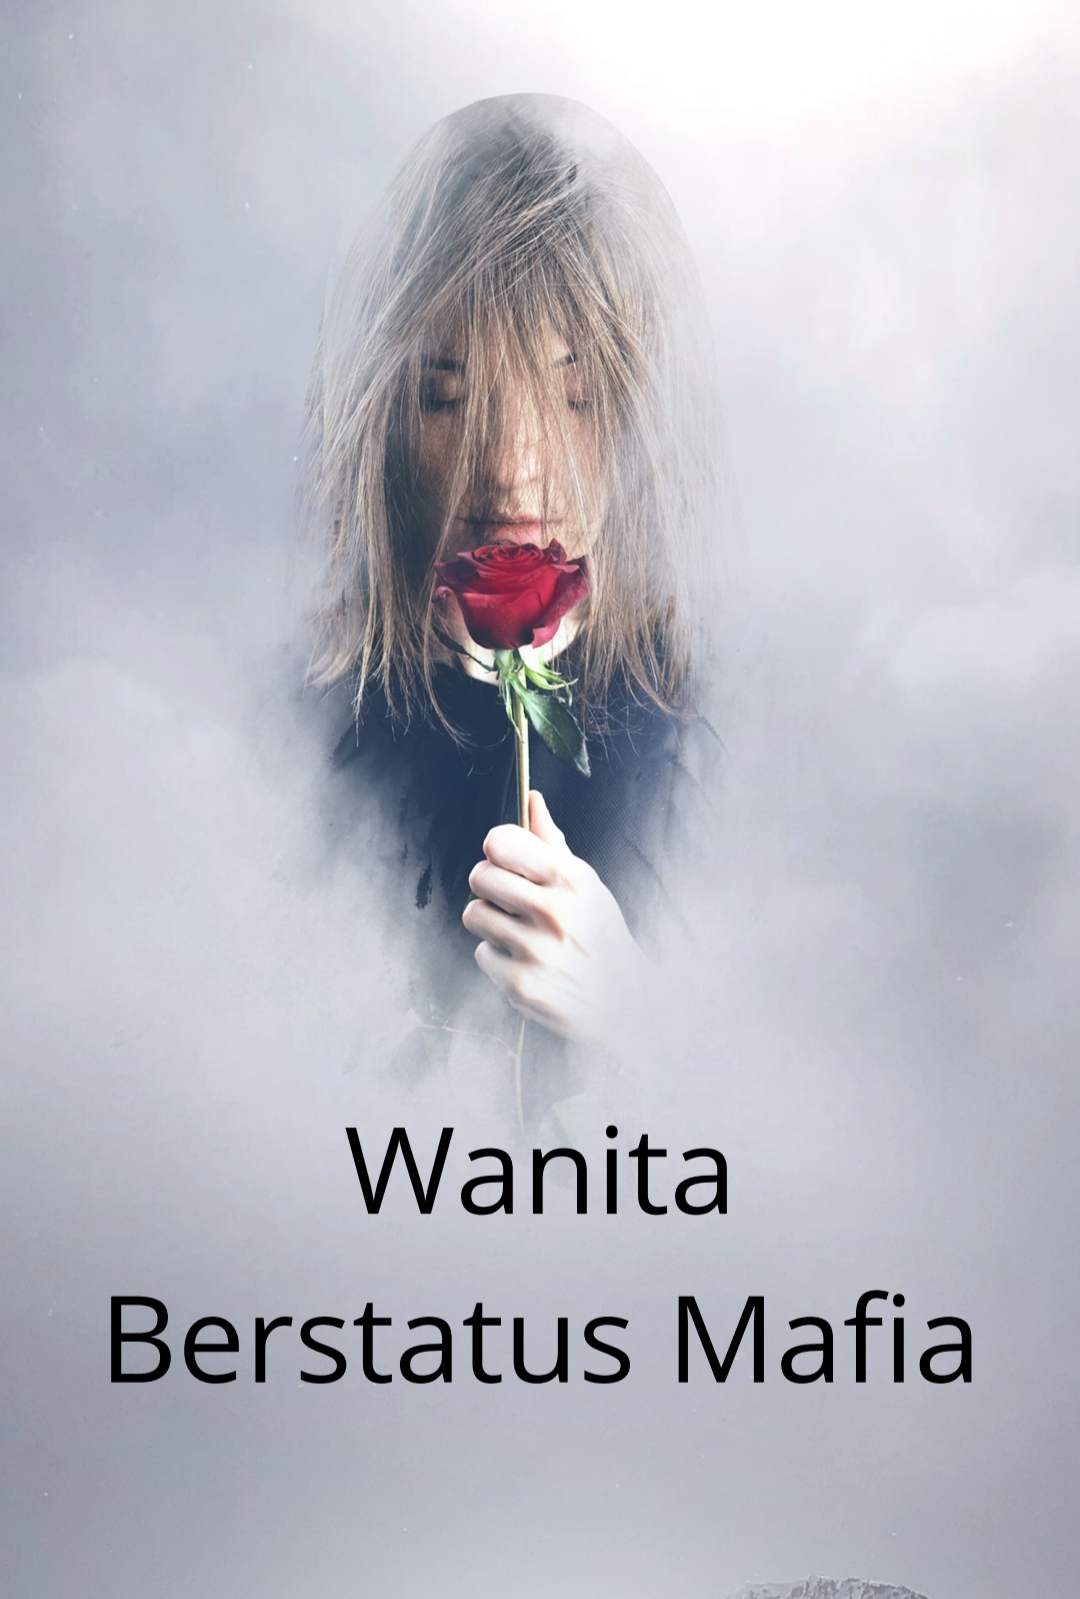 Wanita Berstatus Mafia